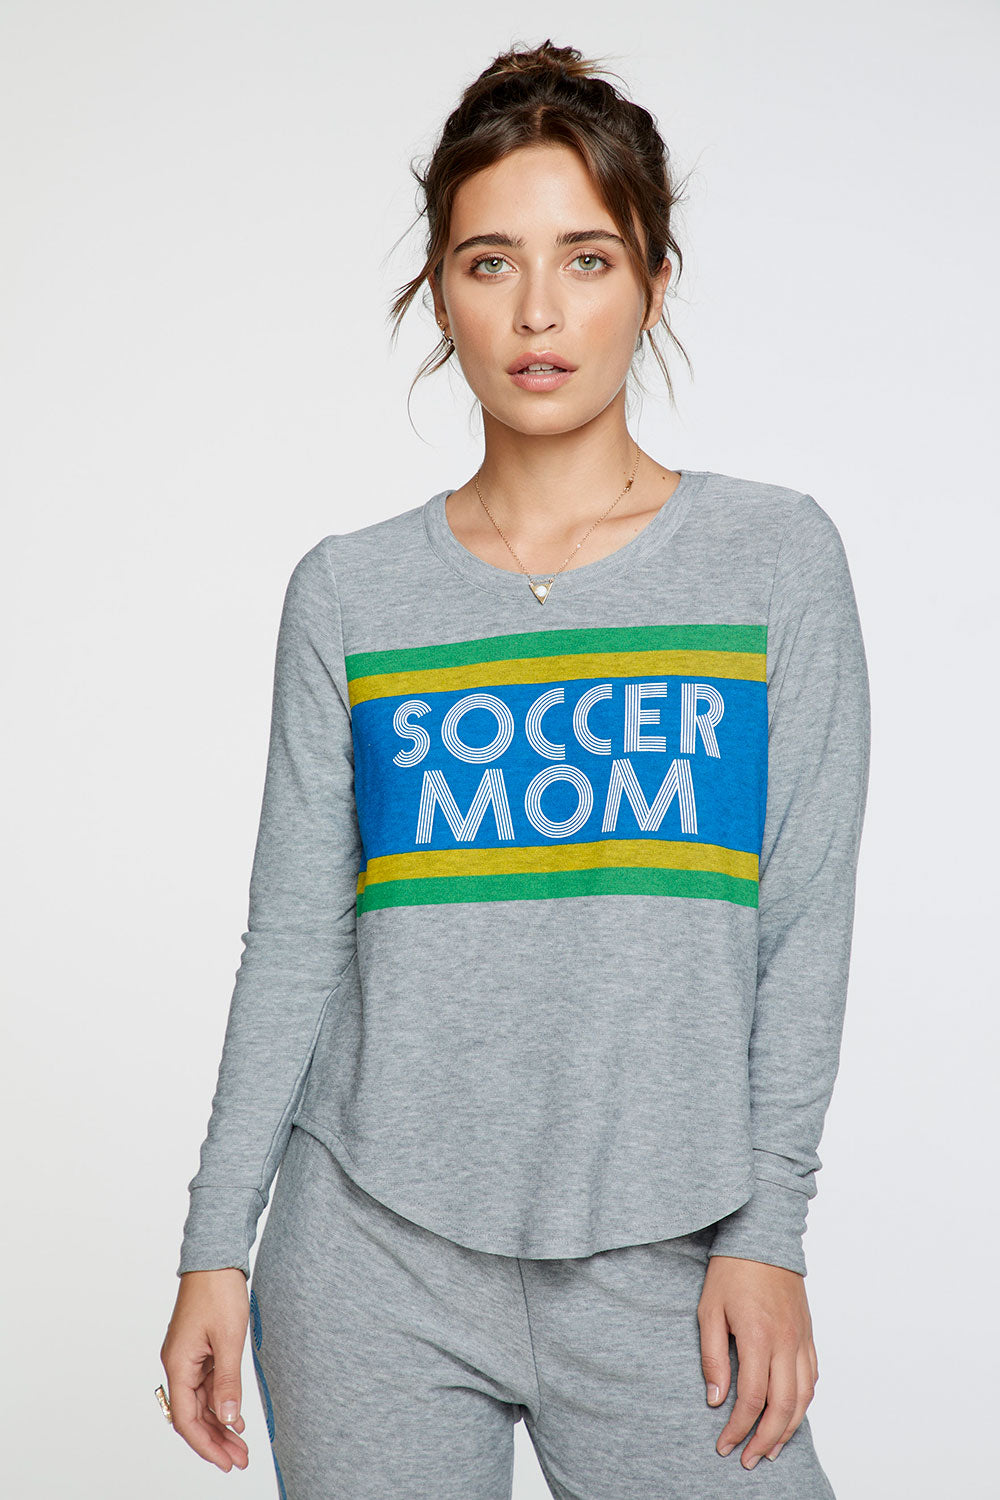 soccer mom sweater